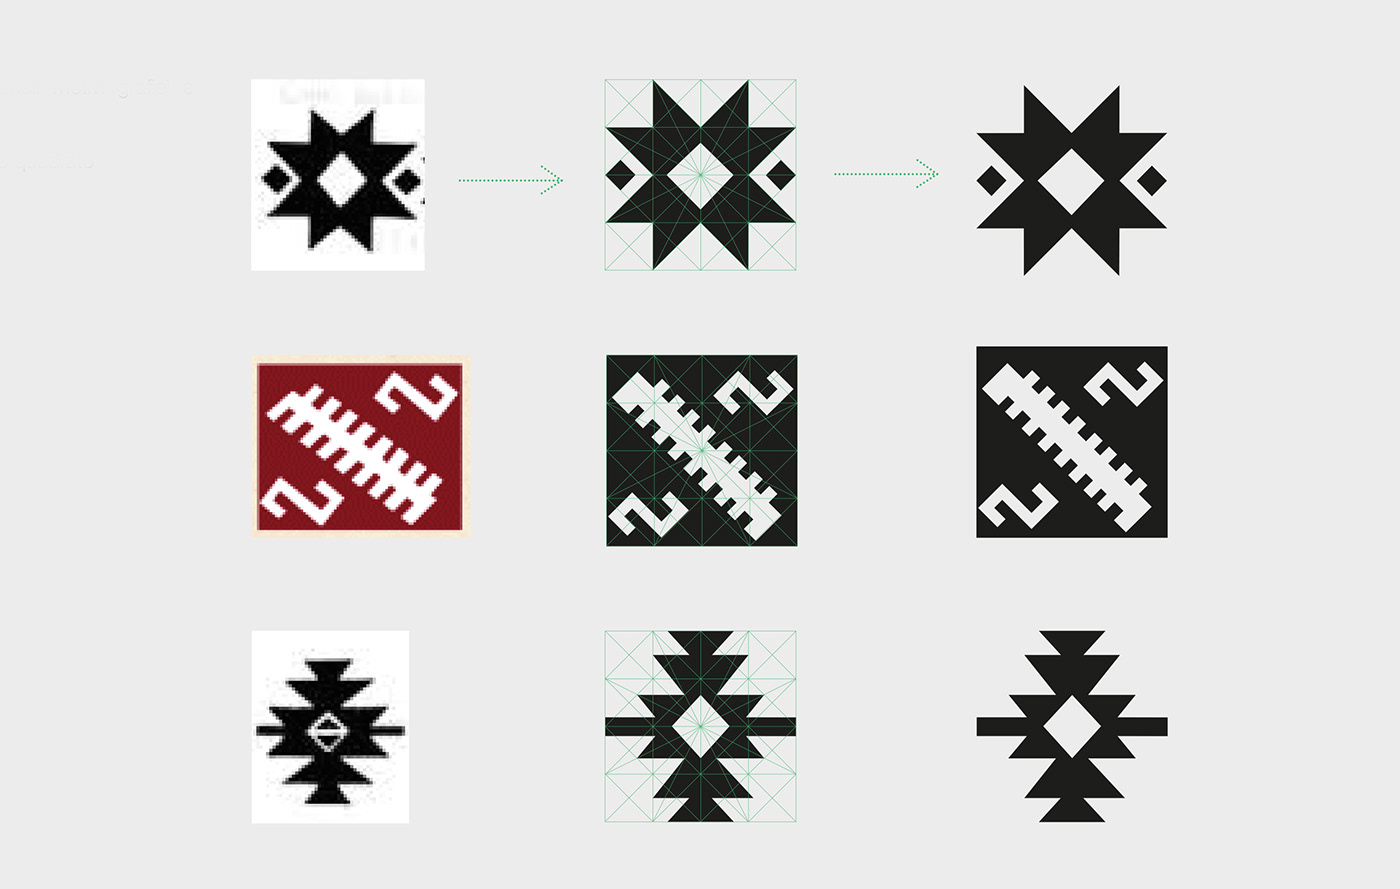 ilturco ferrara dynamic logo brand identity symbols carpet persian coworking